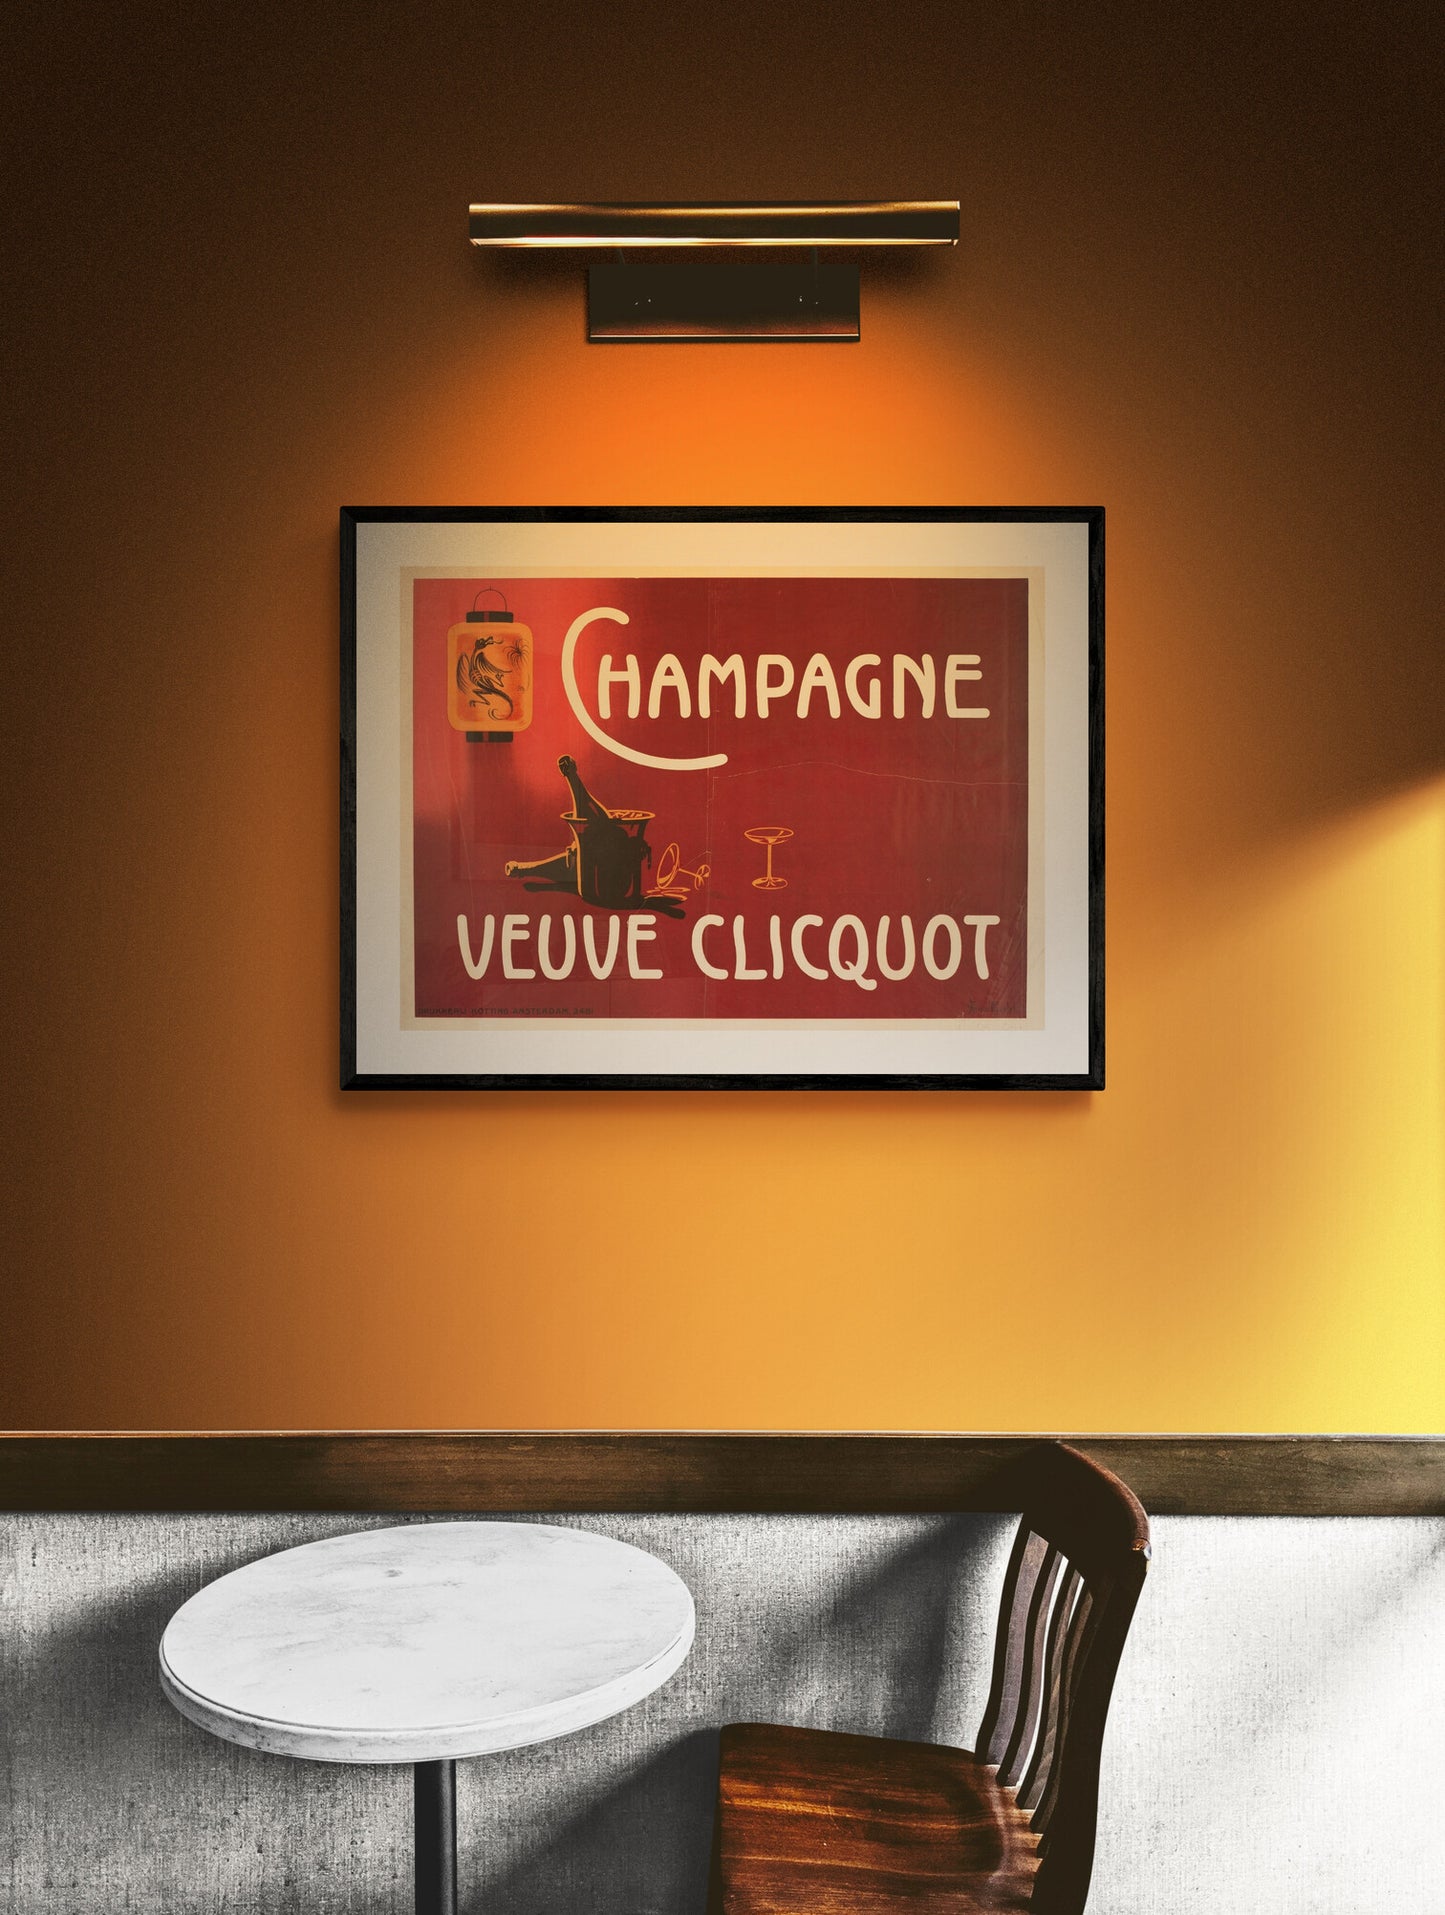 Veuve Clicquot wall art (1900s) | Champagne | Arnold van Roessel Posters, Prints, & Visual Artwork The Trumpet Shop   